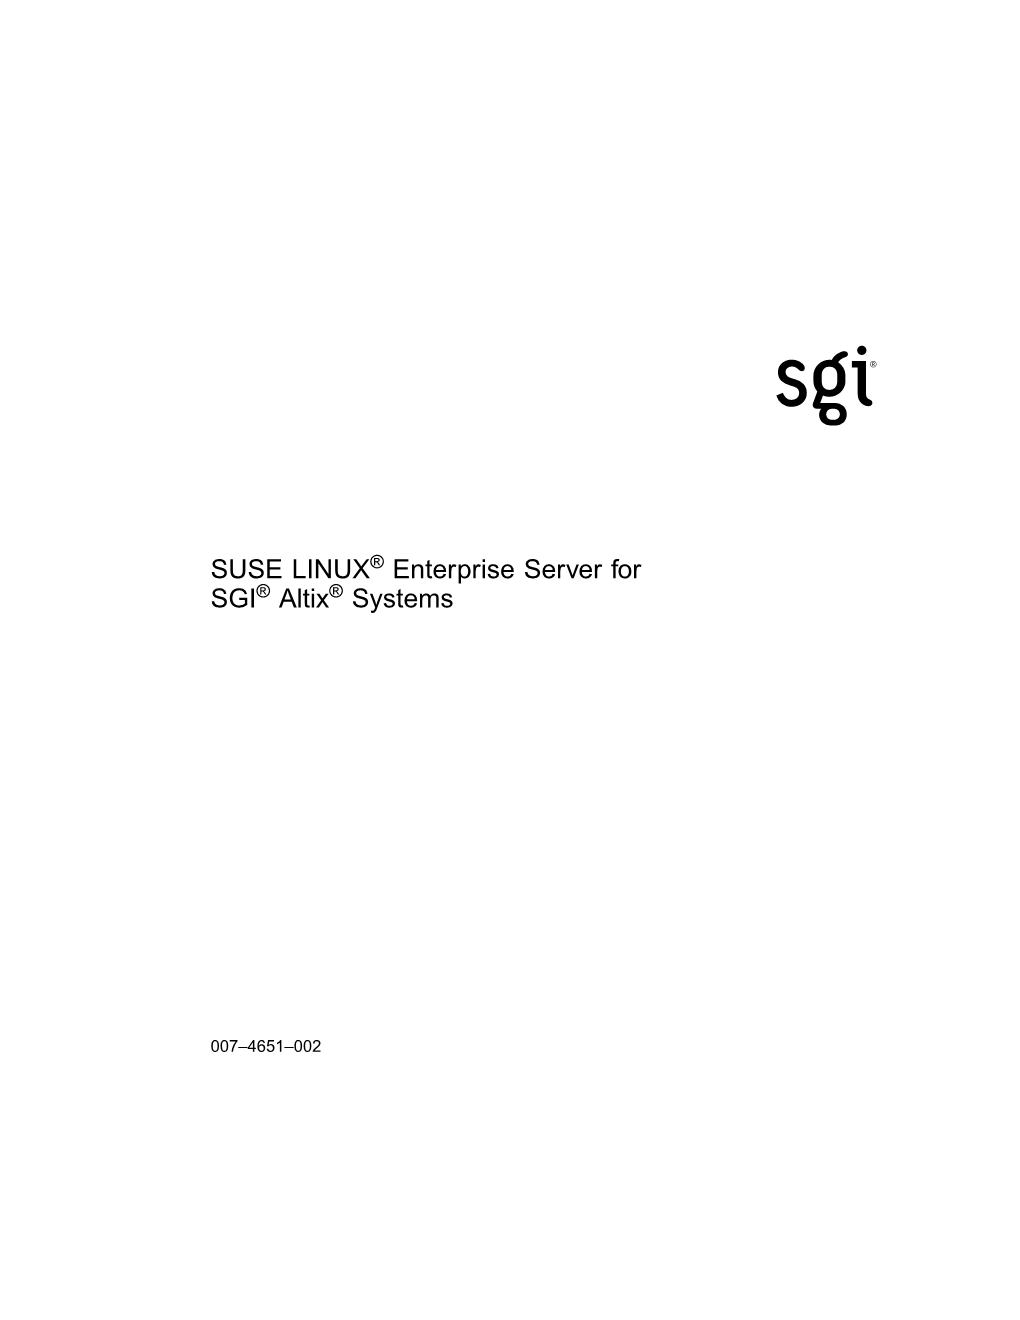 SUSE LINUX® Enterprise Server for SGI® Altix® Systems